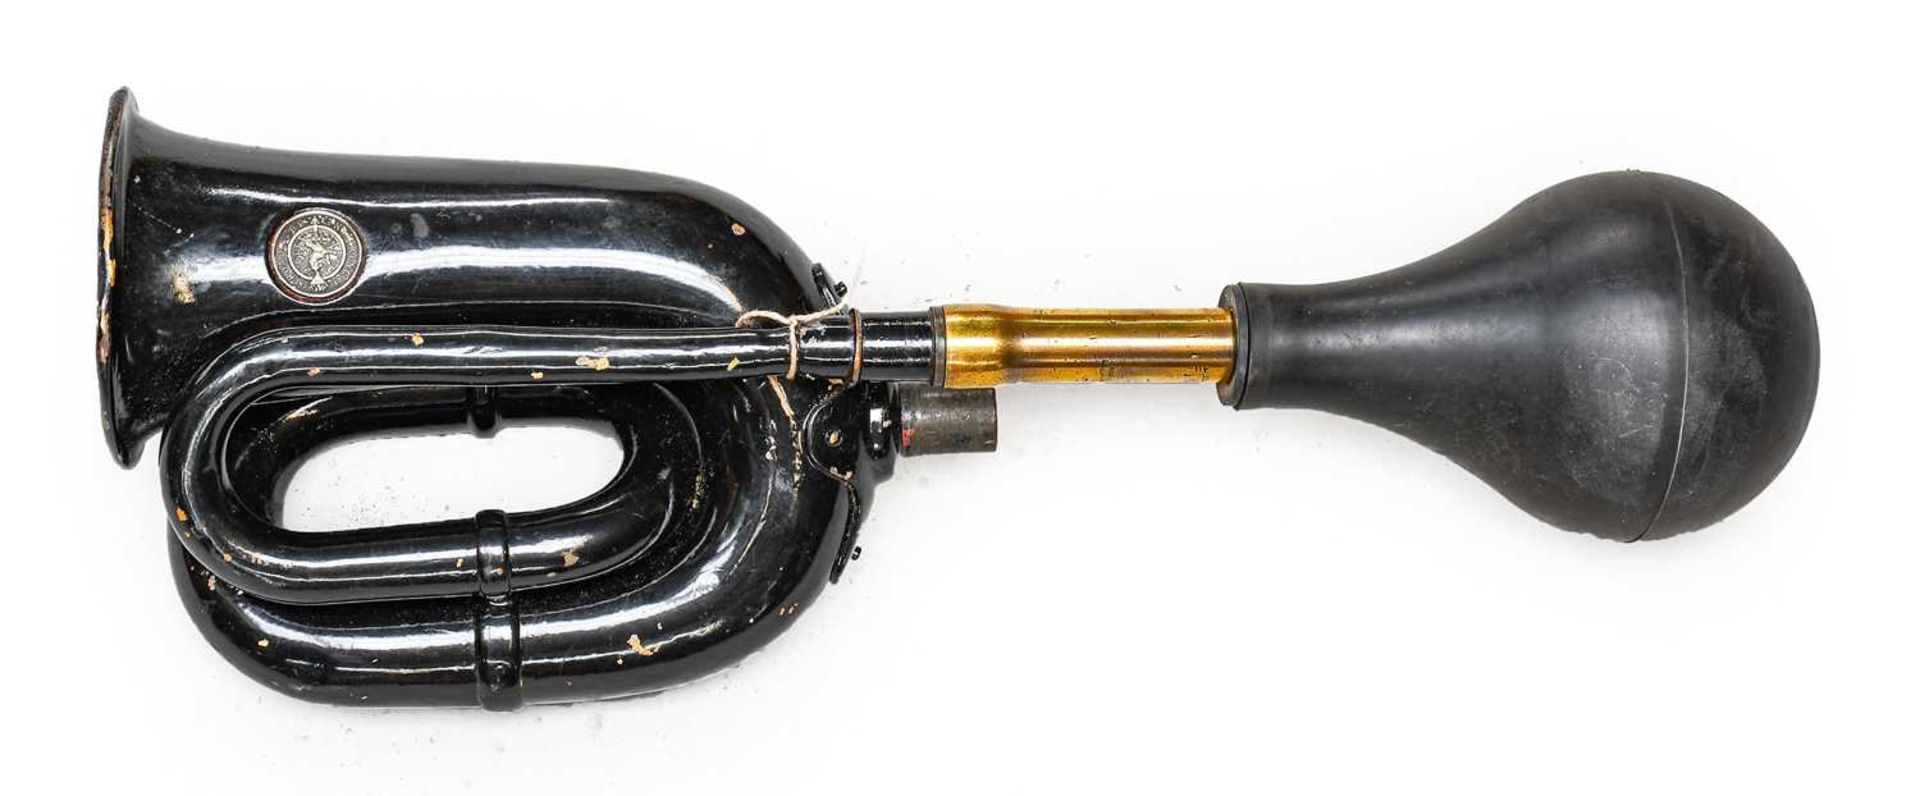 An Edwardian Double-Twist Bulb Horn, made in Birmingham by Joseph Lucas, King of the Road 38,